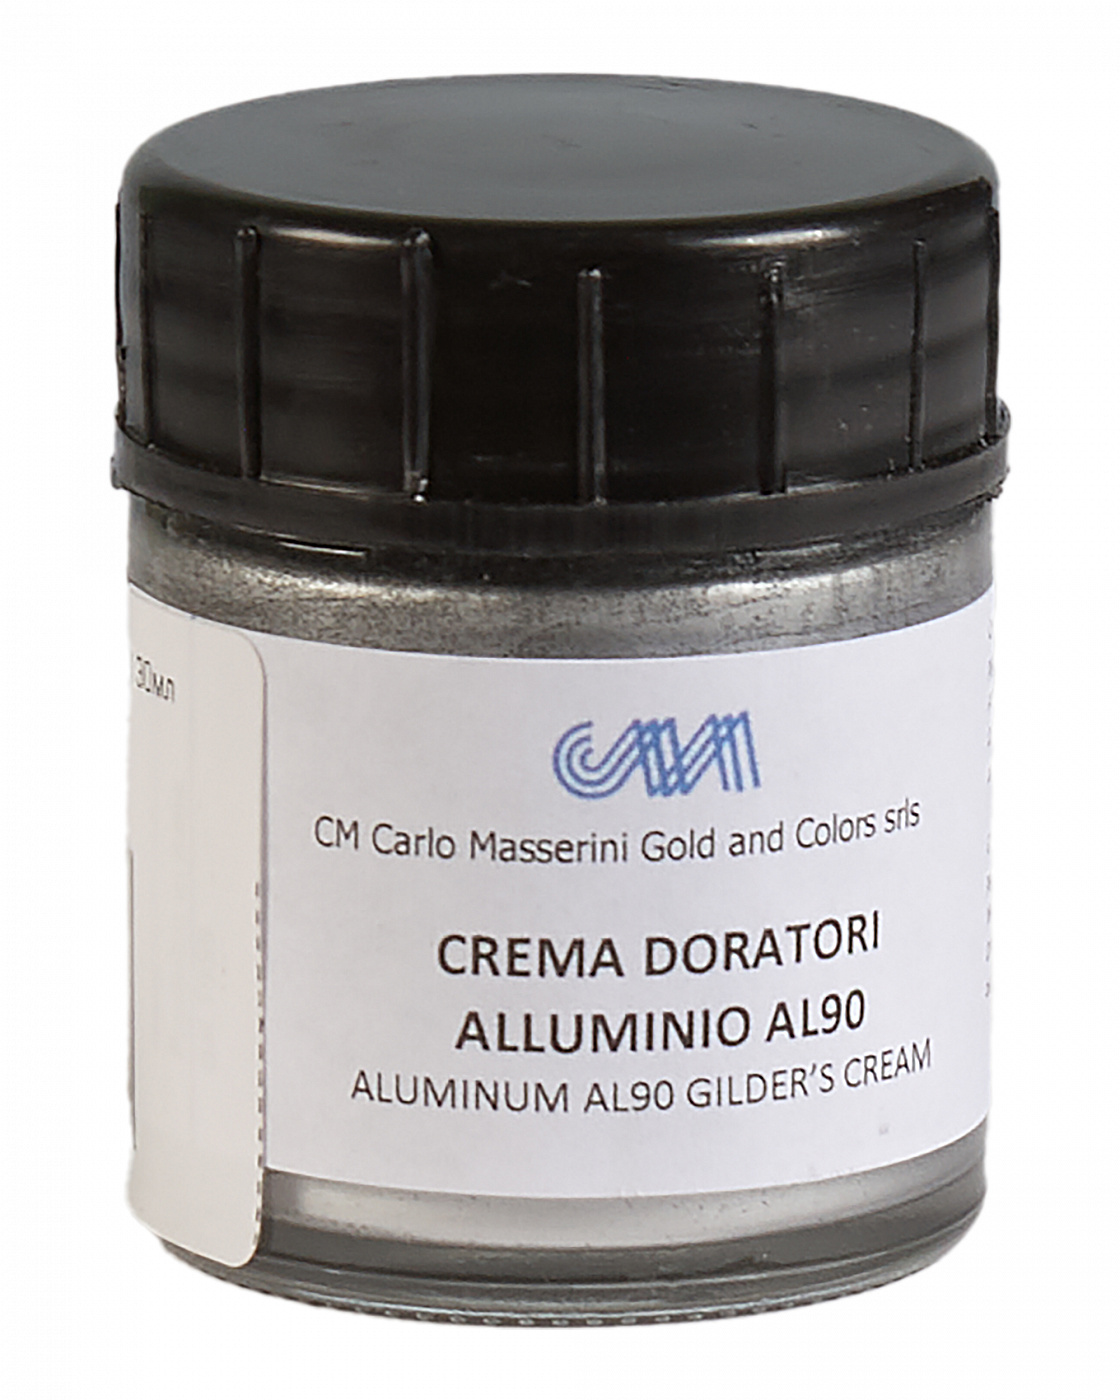 Паста бронзовая Masserini Gilding Cream NEW 30 мл алюминий, стеклянная банка кортик бронзовая птица